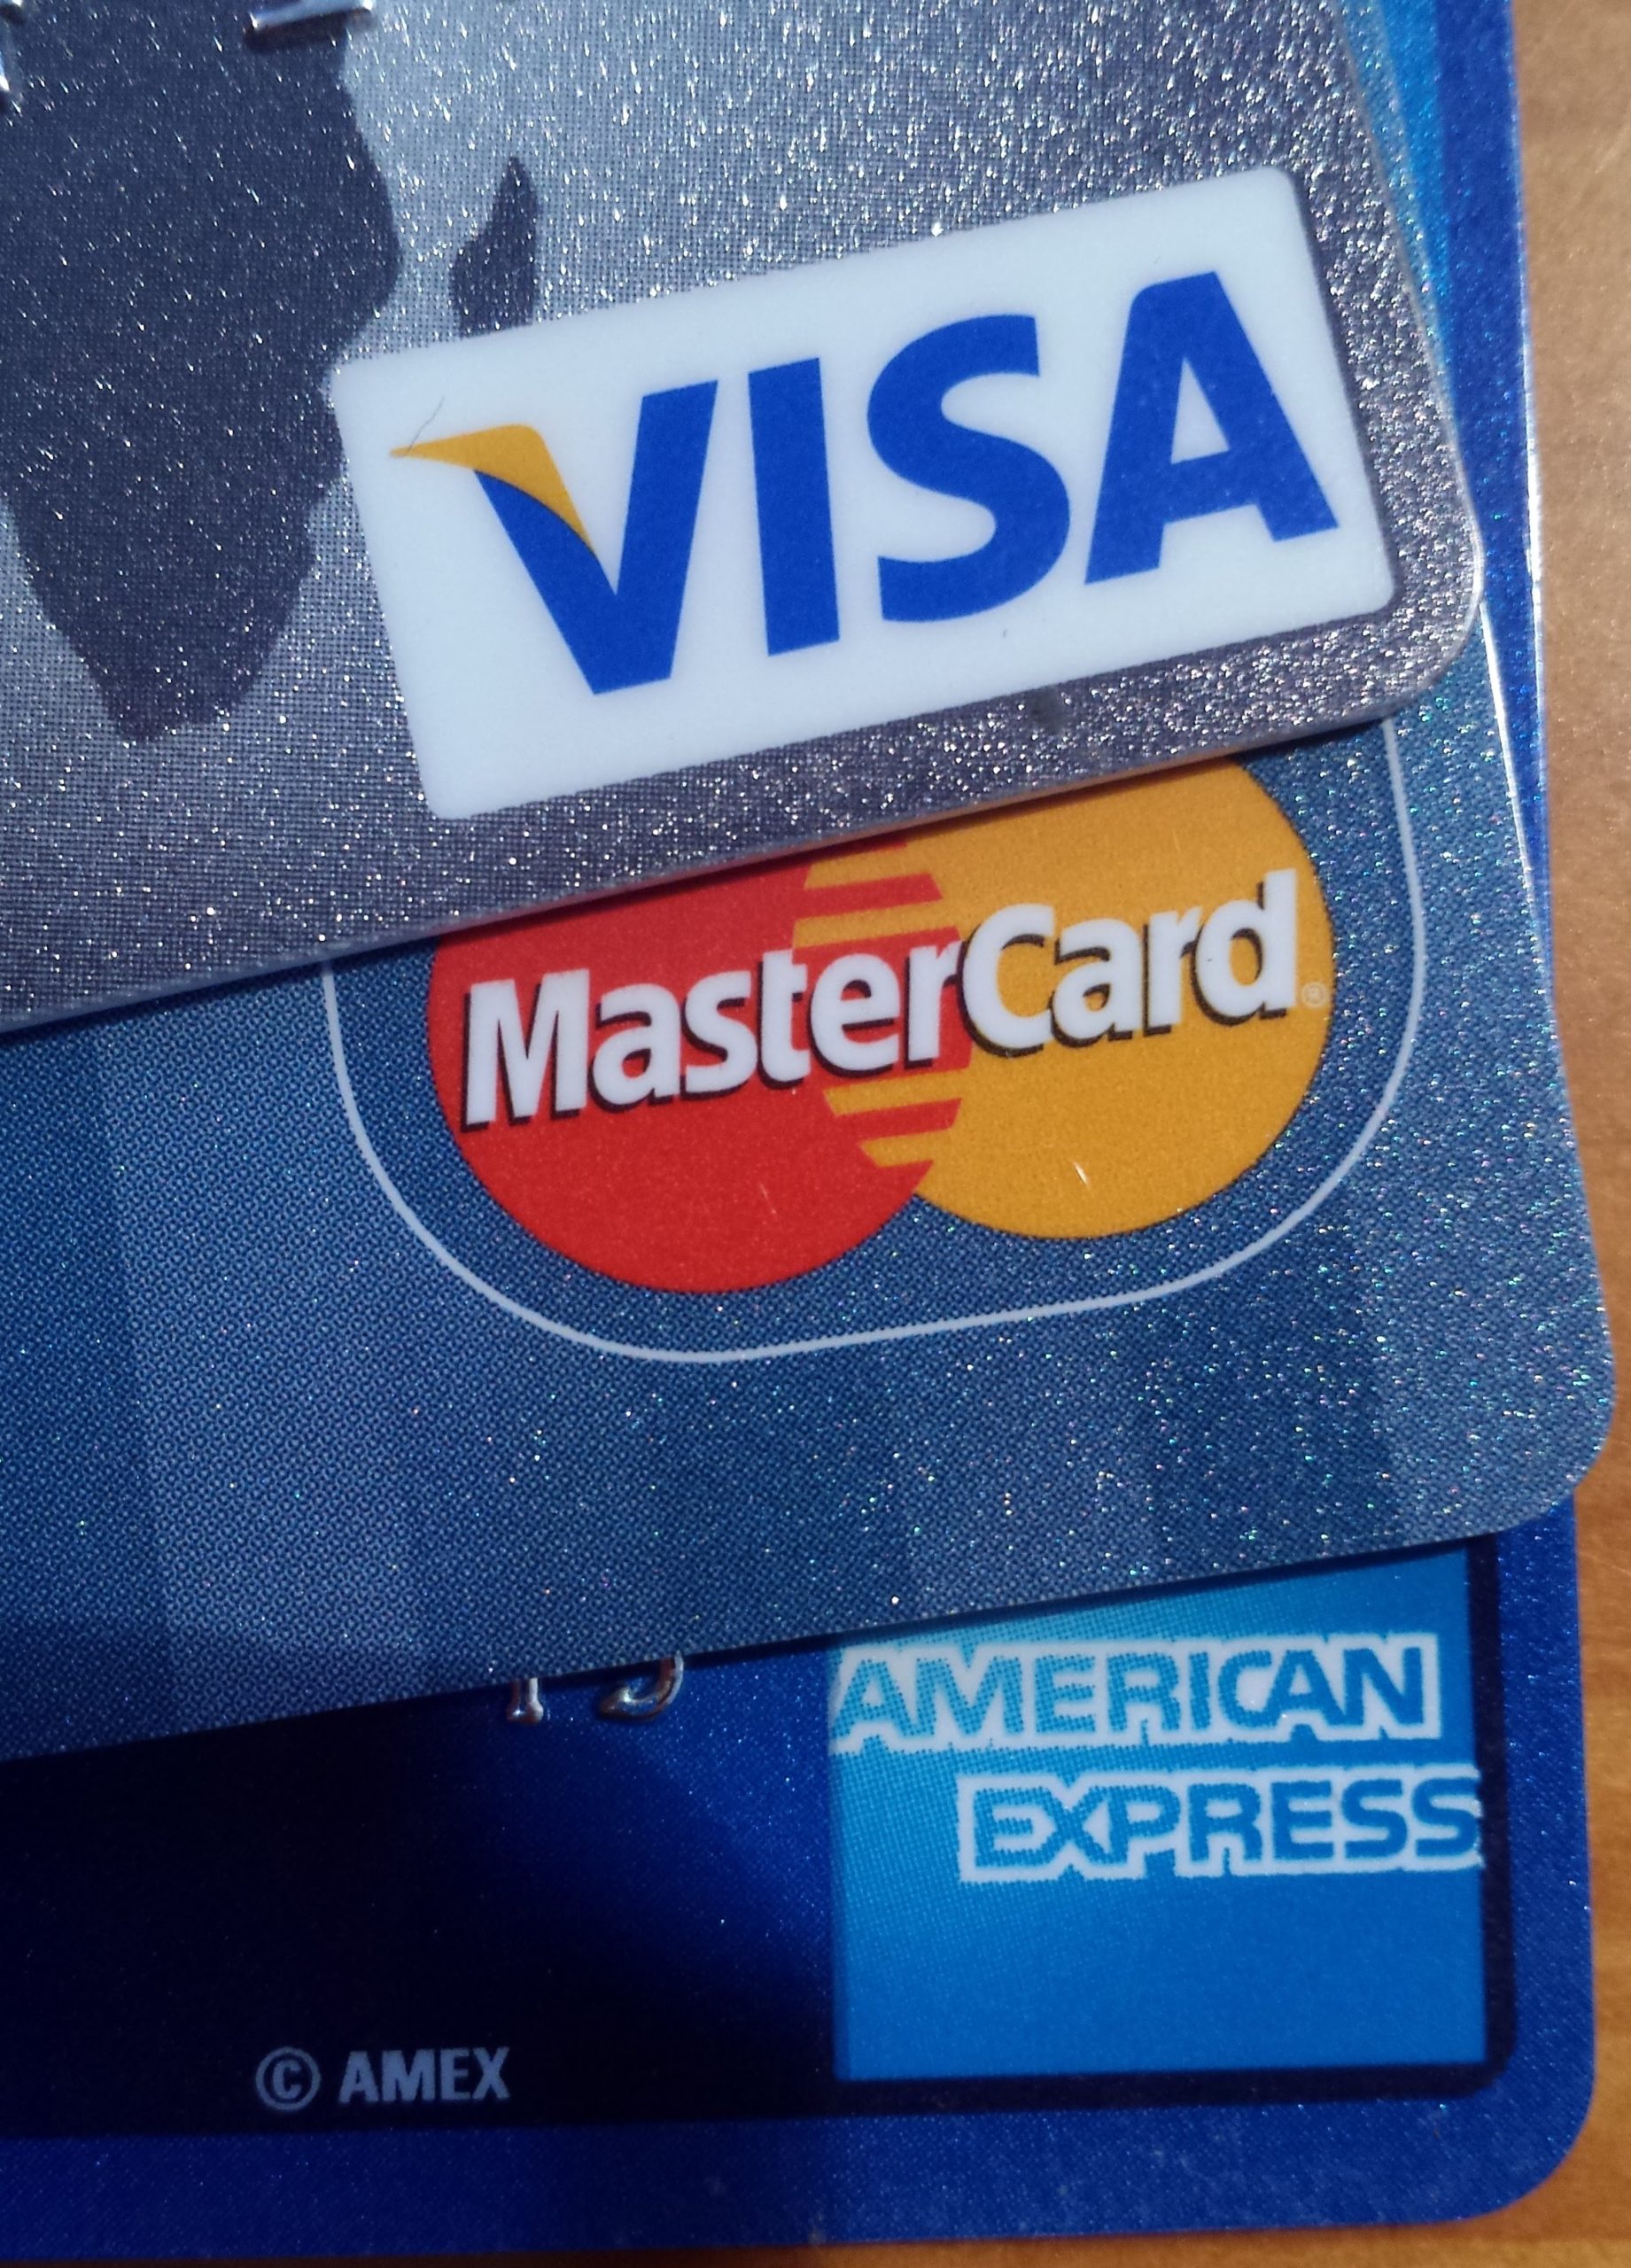 Credit Card Logos 2015 12 1816 27 350044 Scaled